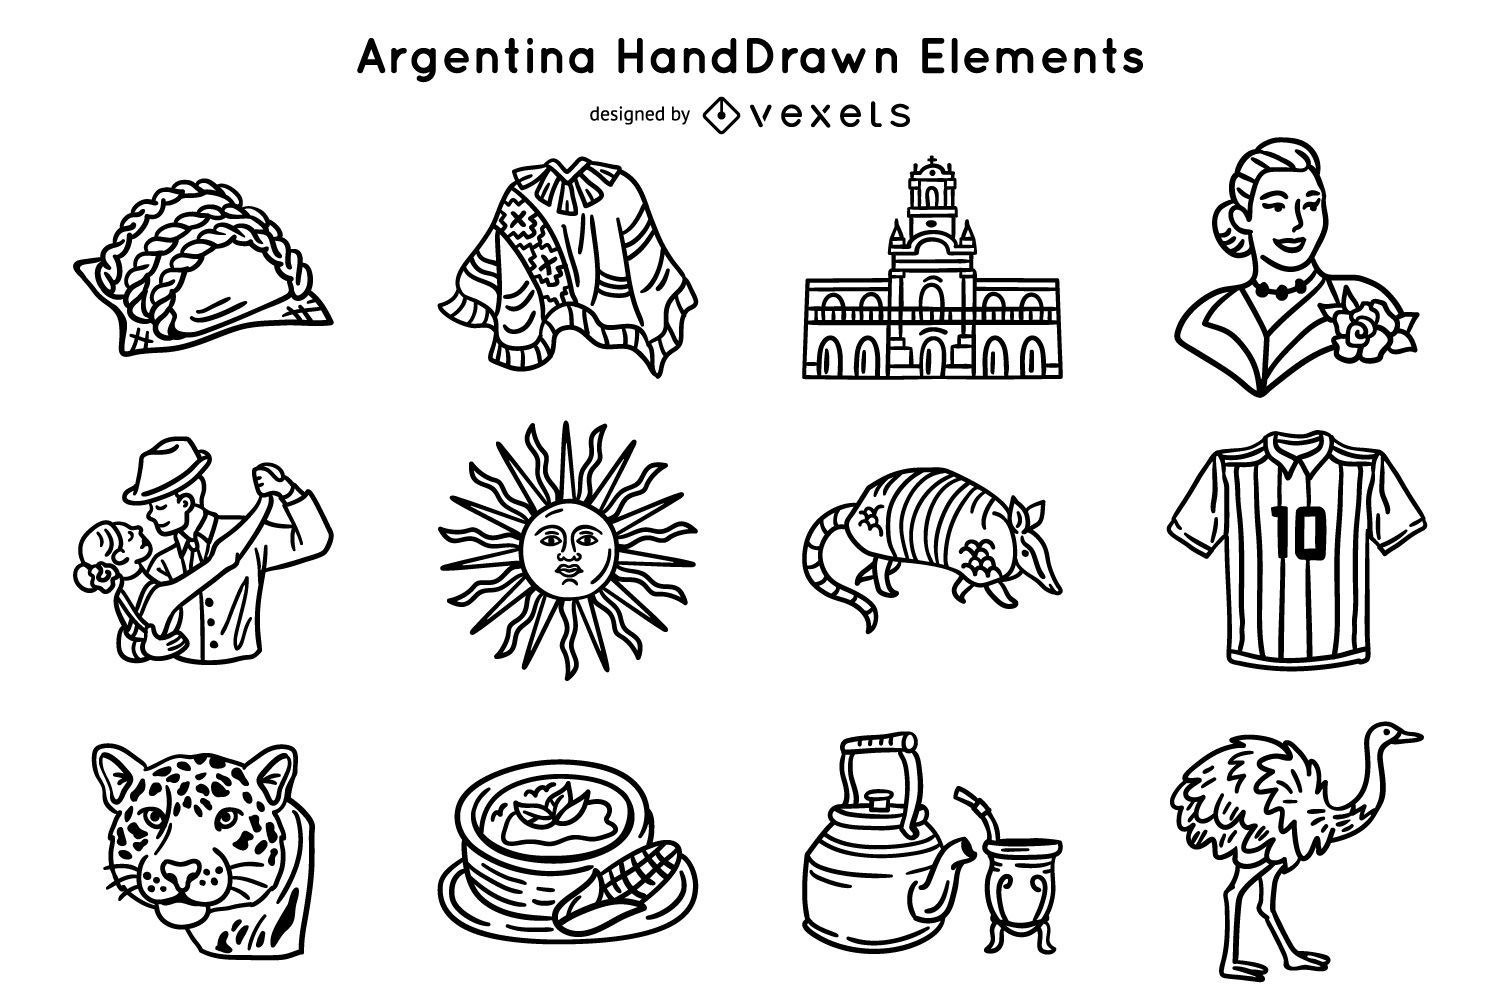 Paquete de elementos de trazo de argentina dibujados a mano